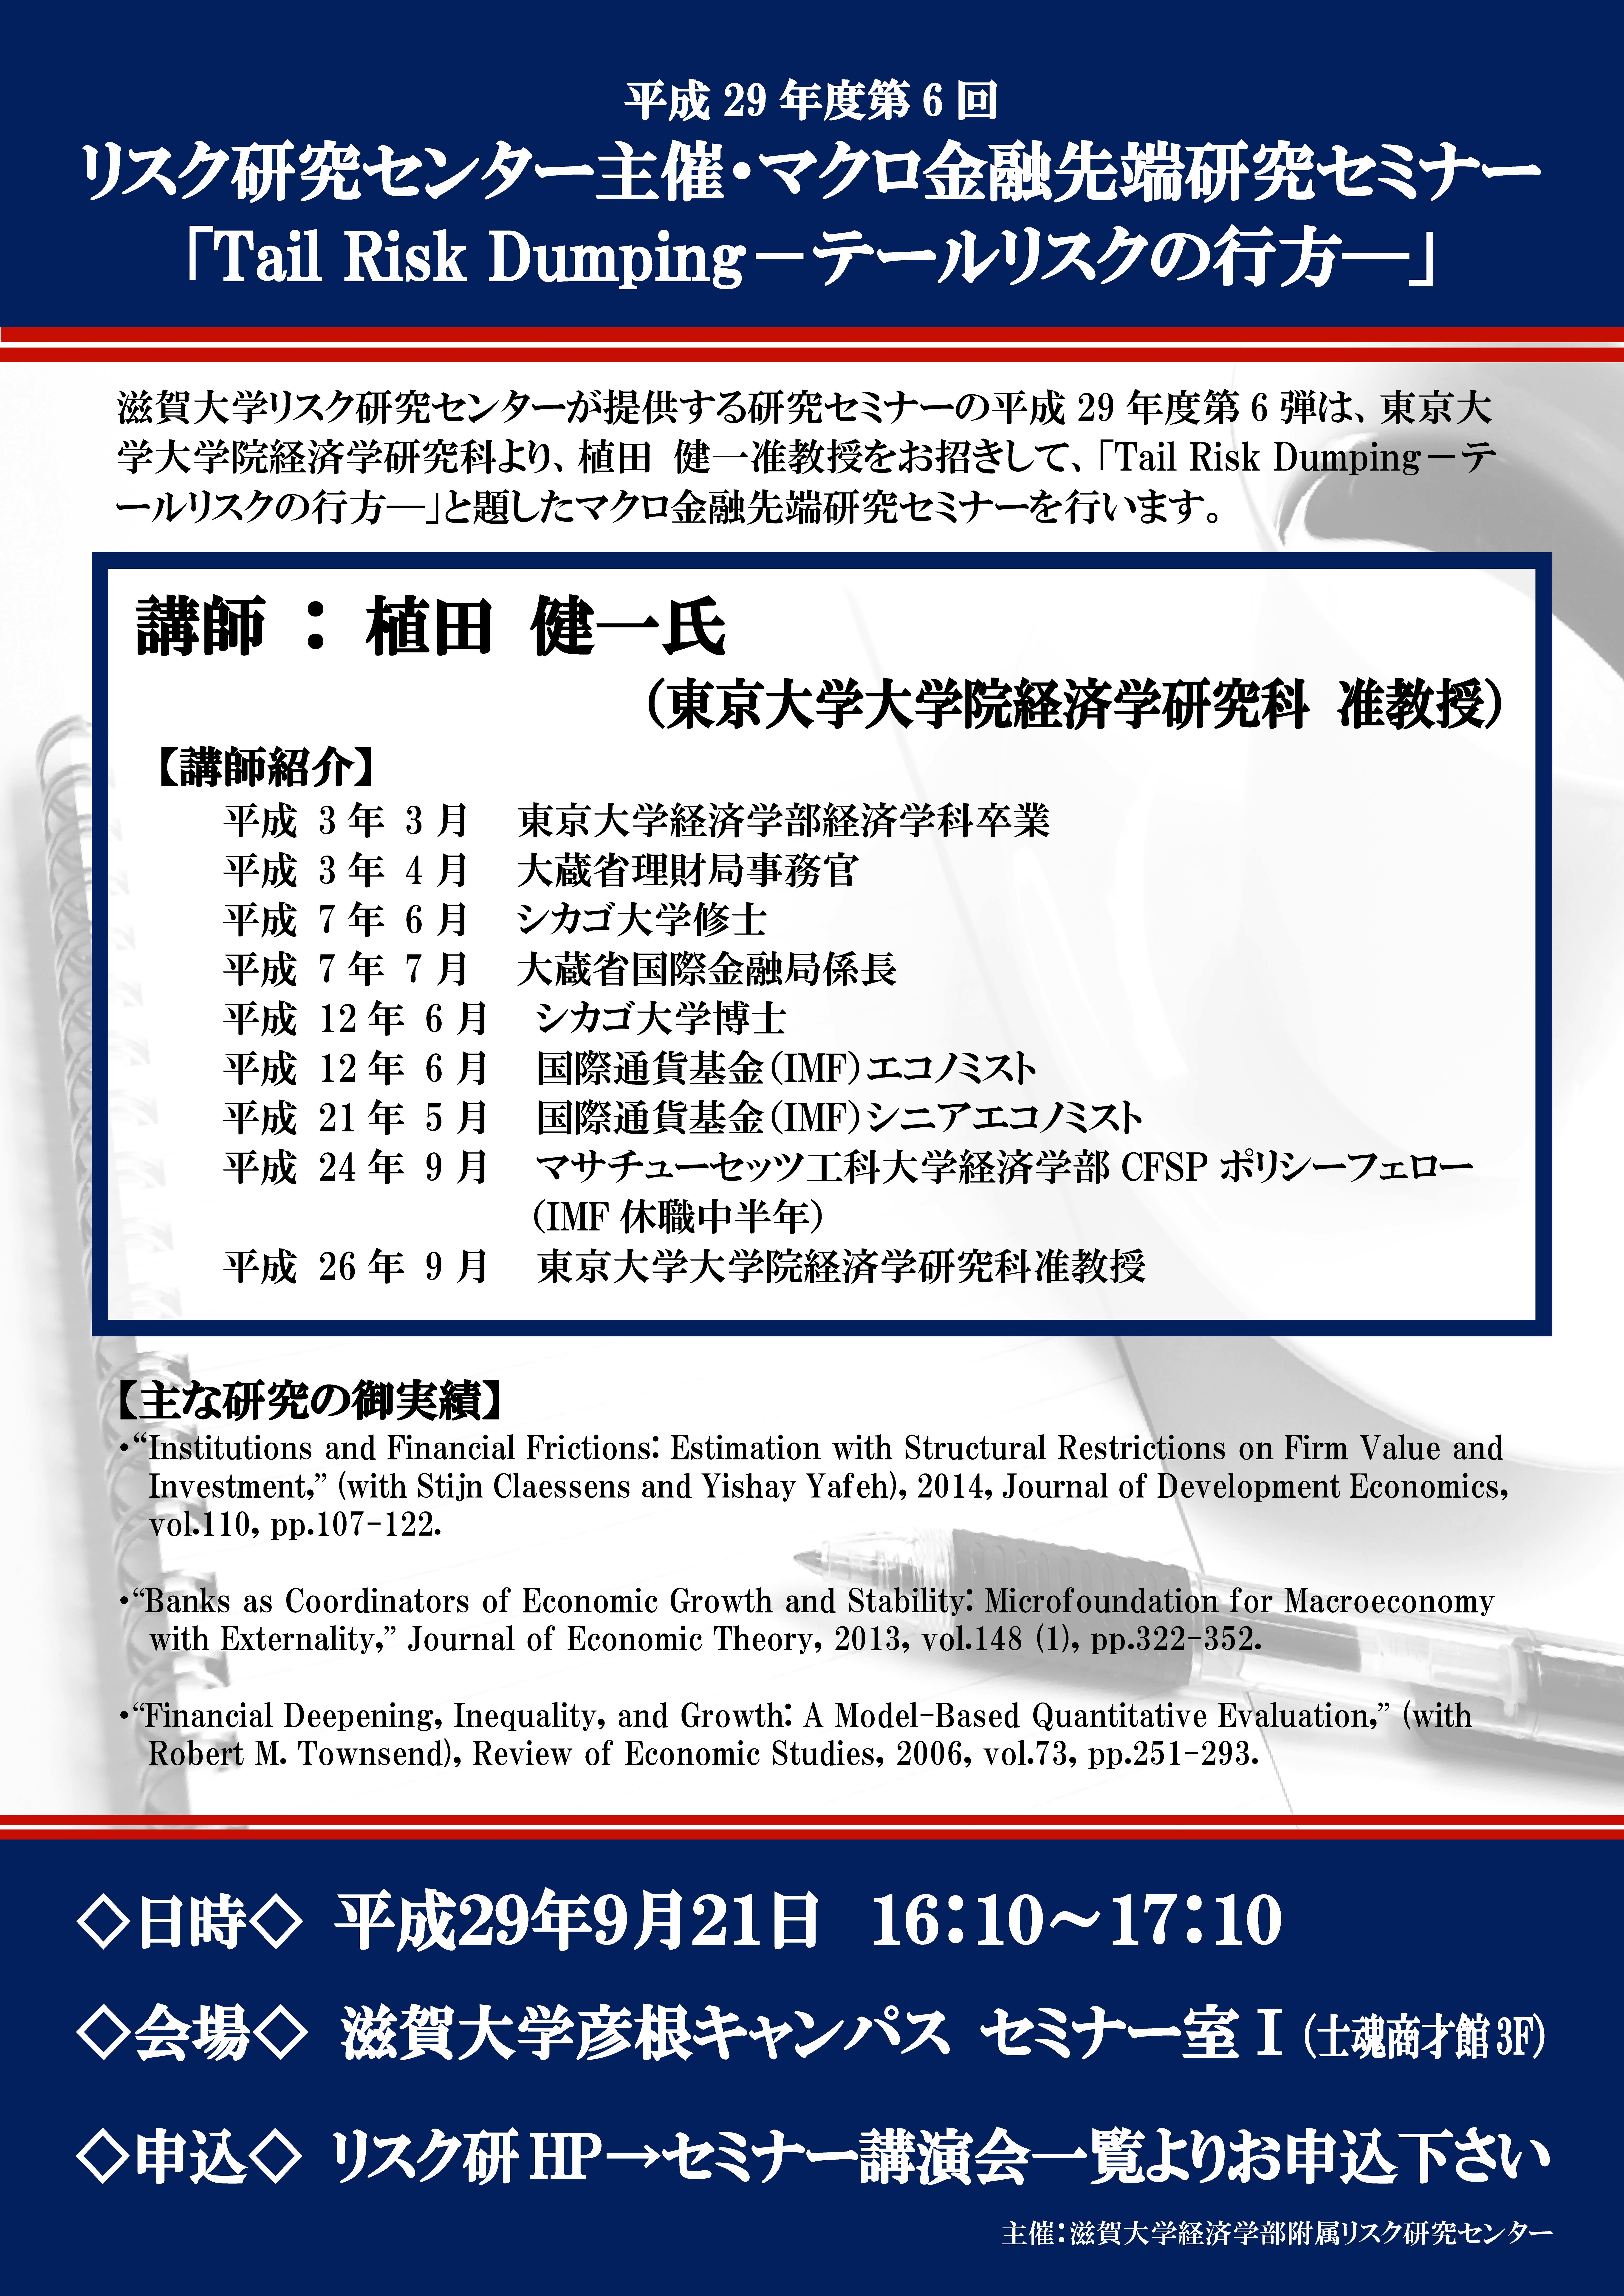 https://www.econ.shiga-u.ac.jp/risk/poster20170921.jpg